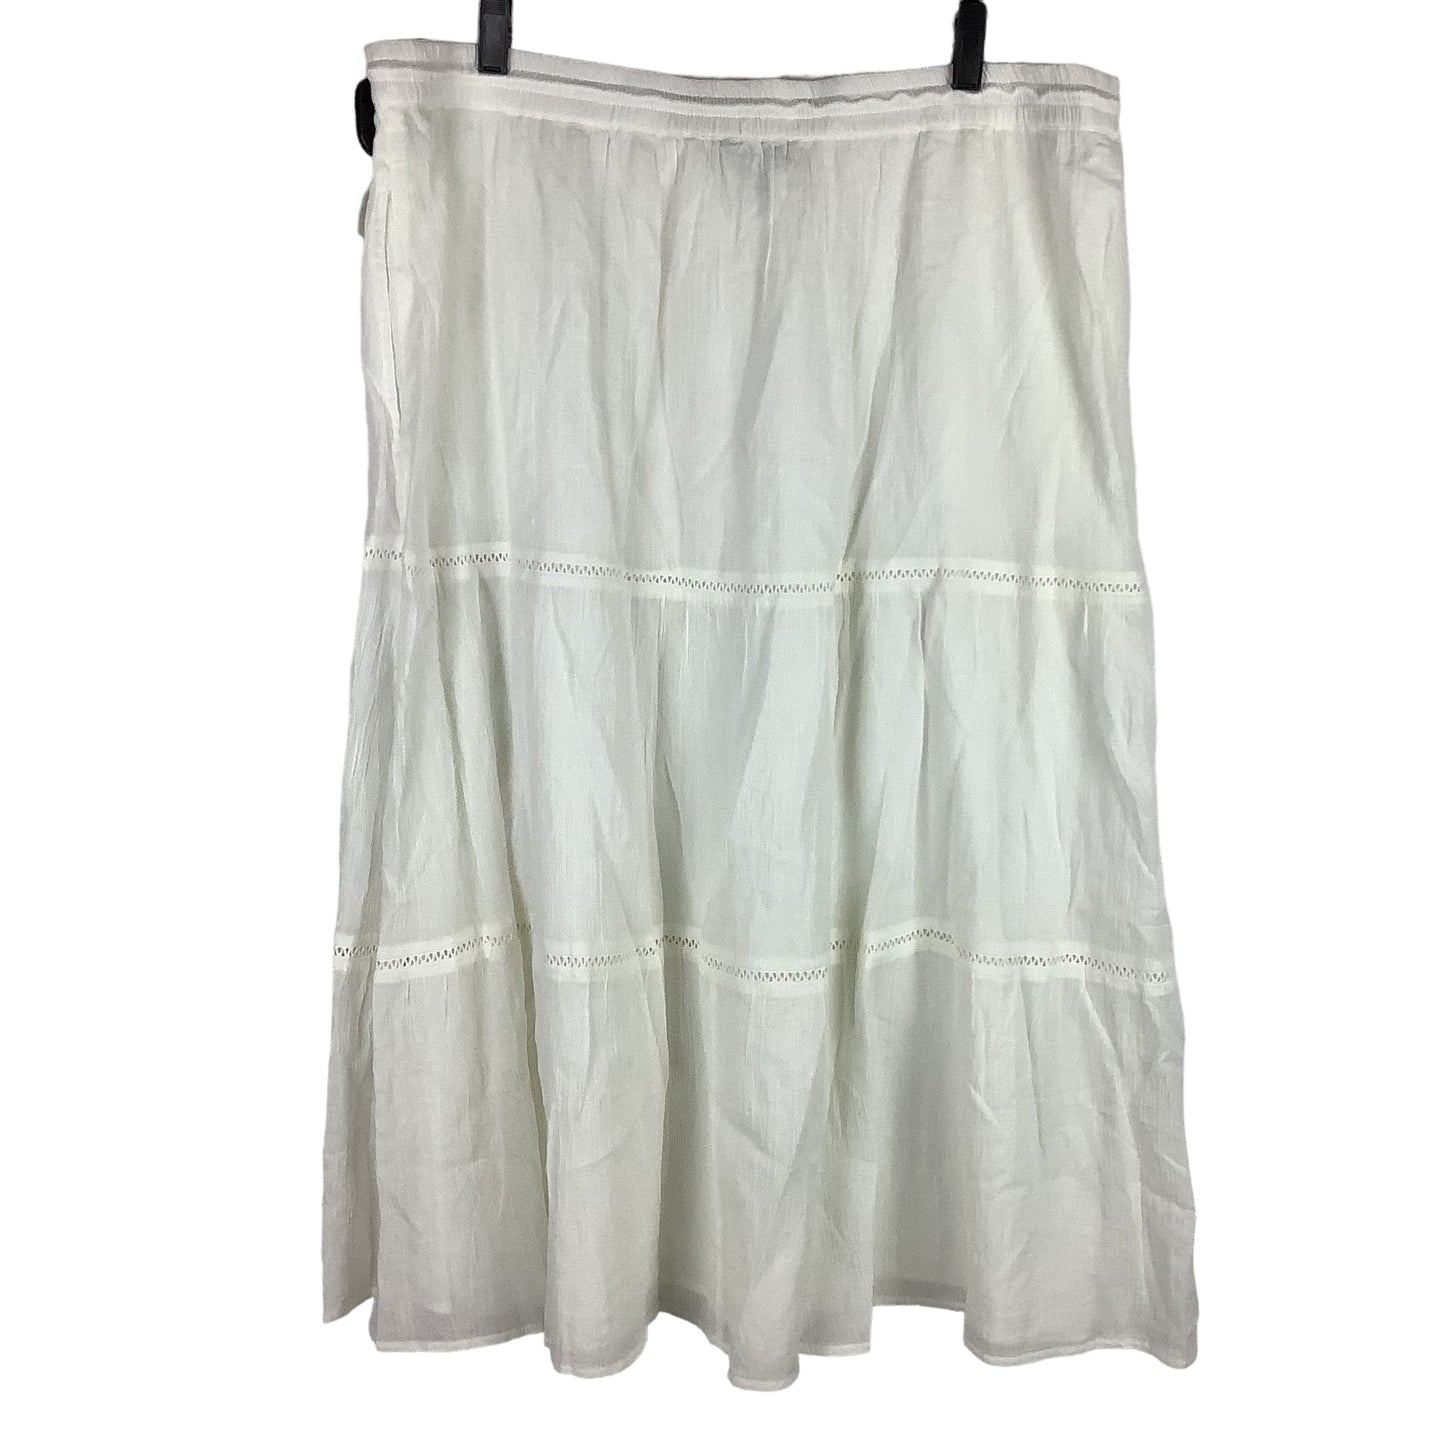 Skirt Midi By Talbots  Size: Xl